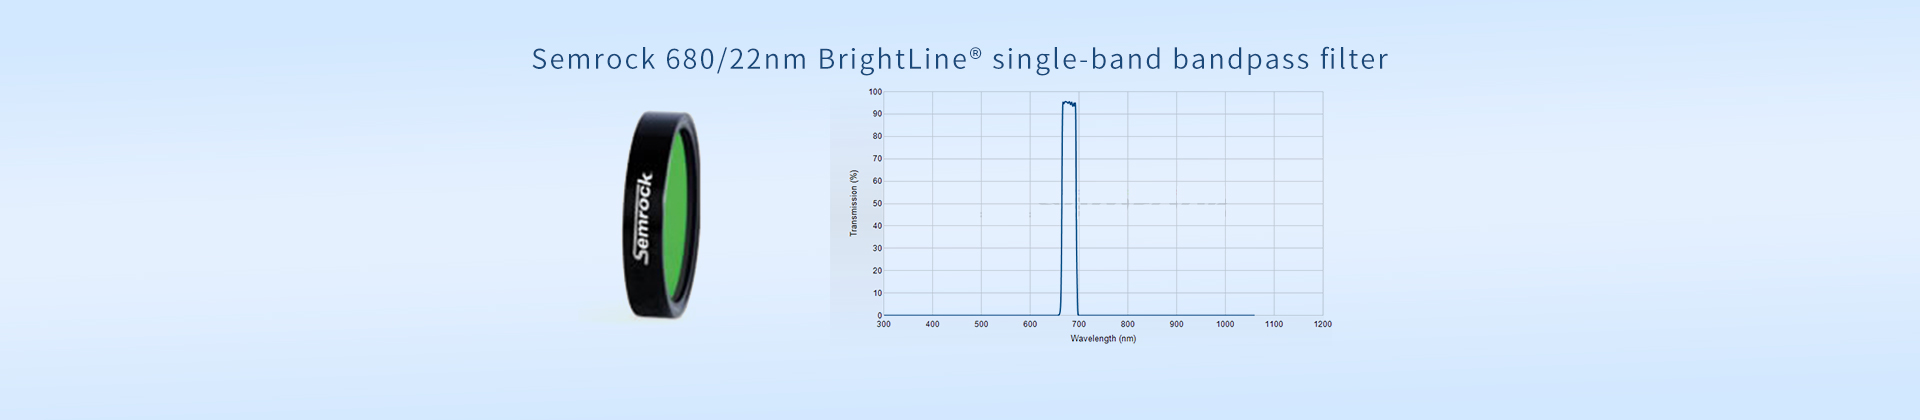 Semrock 680/22nm BrightLine® single-band bandpass filter